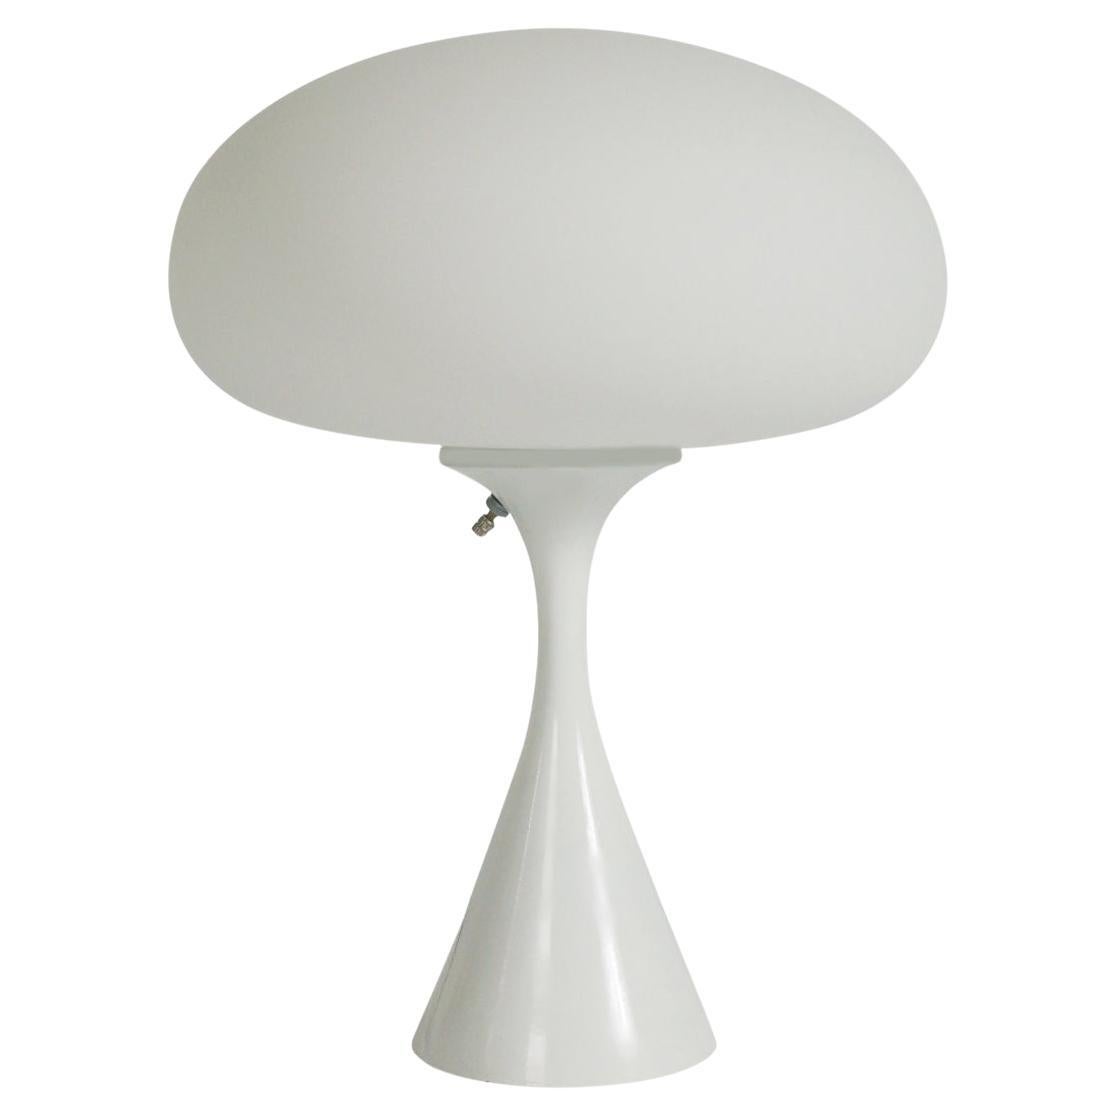 Mid Century Modern Mushroom Table Lamp by Design Line in White